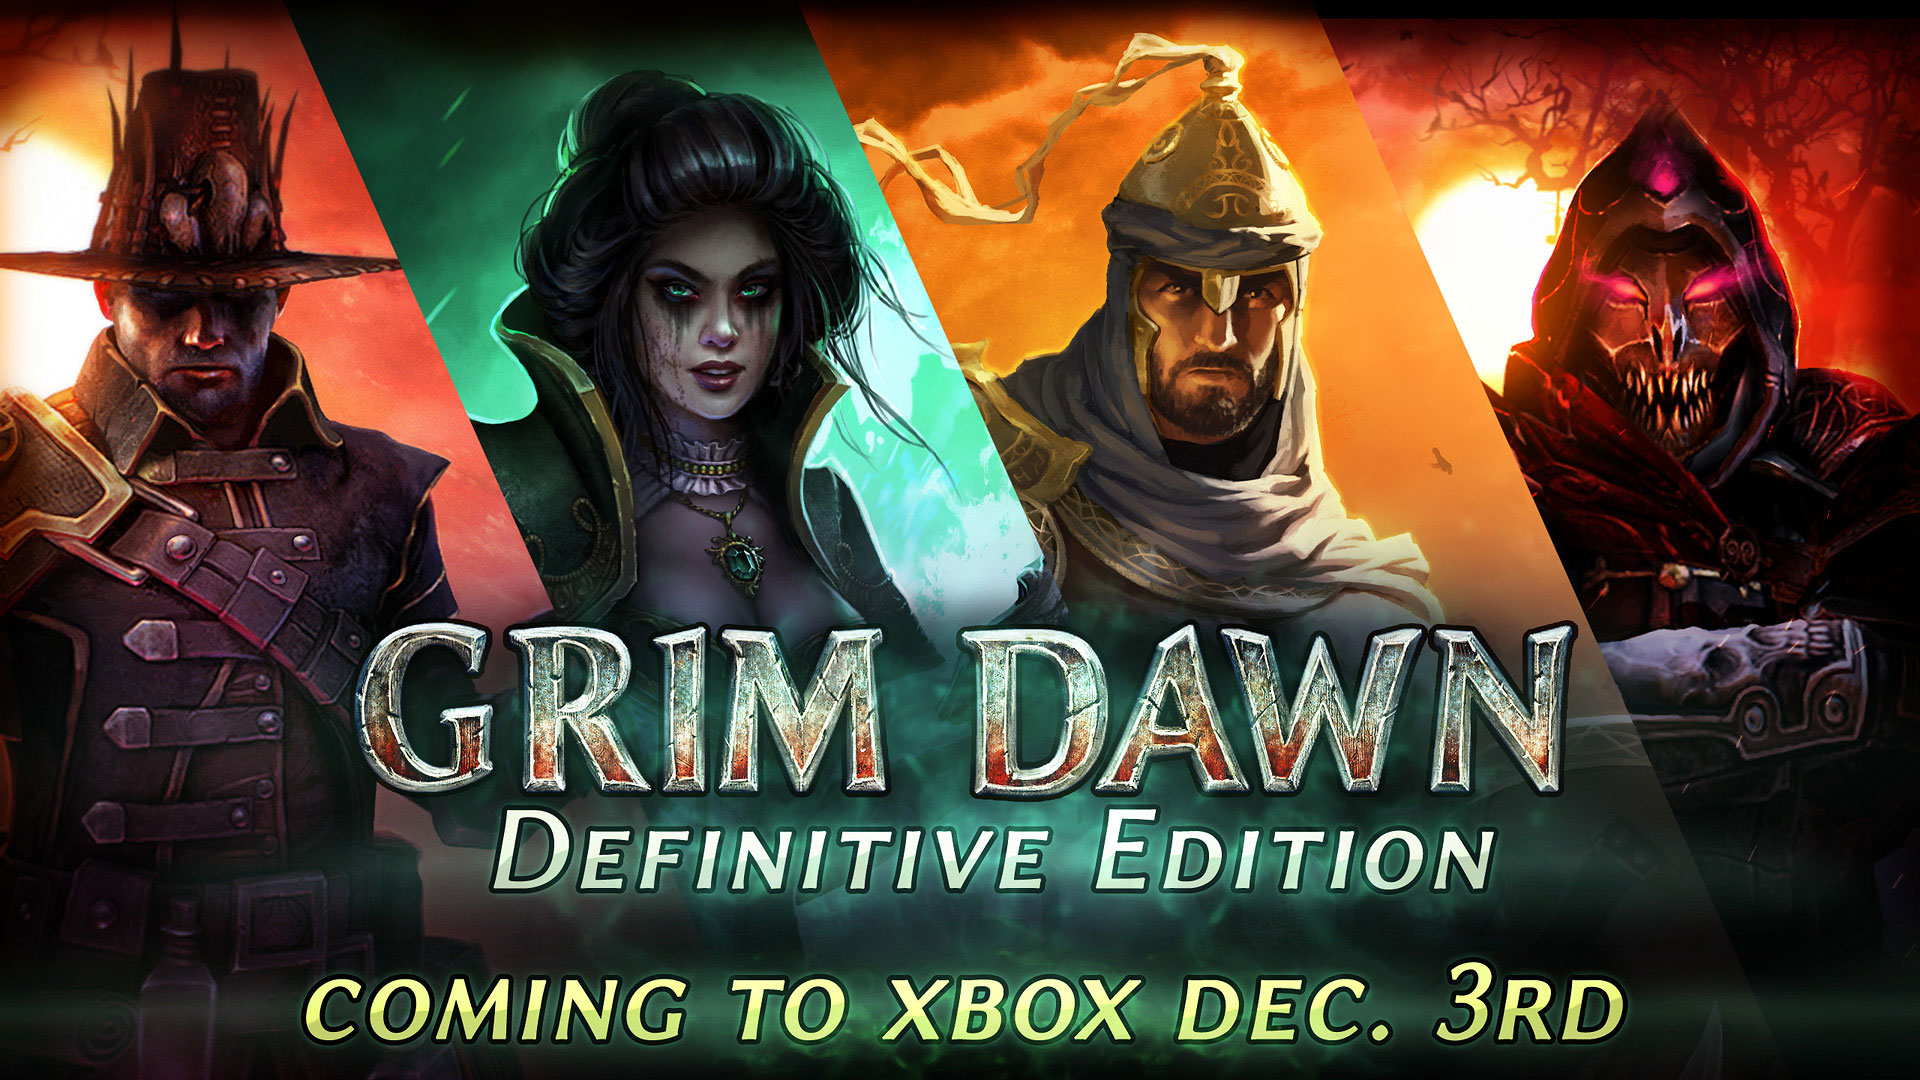 Enter the Apocalyptic Fantasy World of Grim Dawn